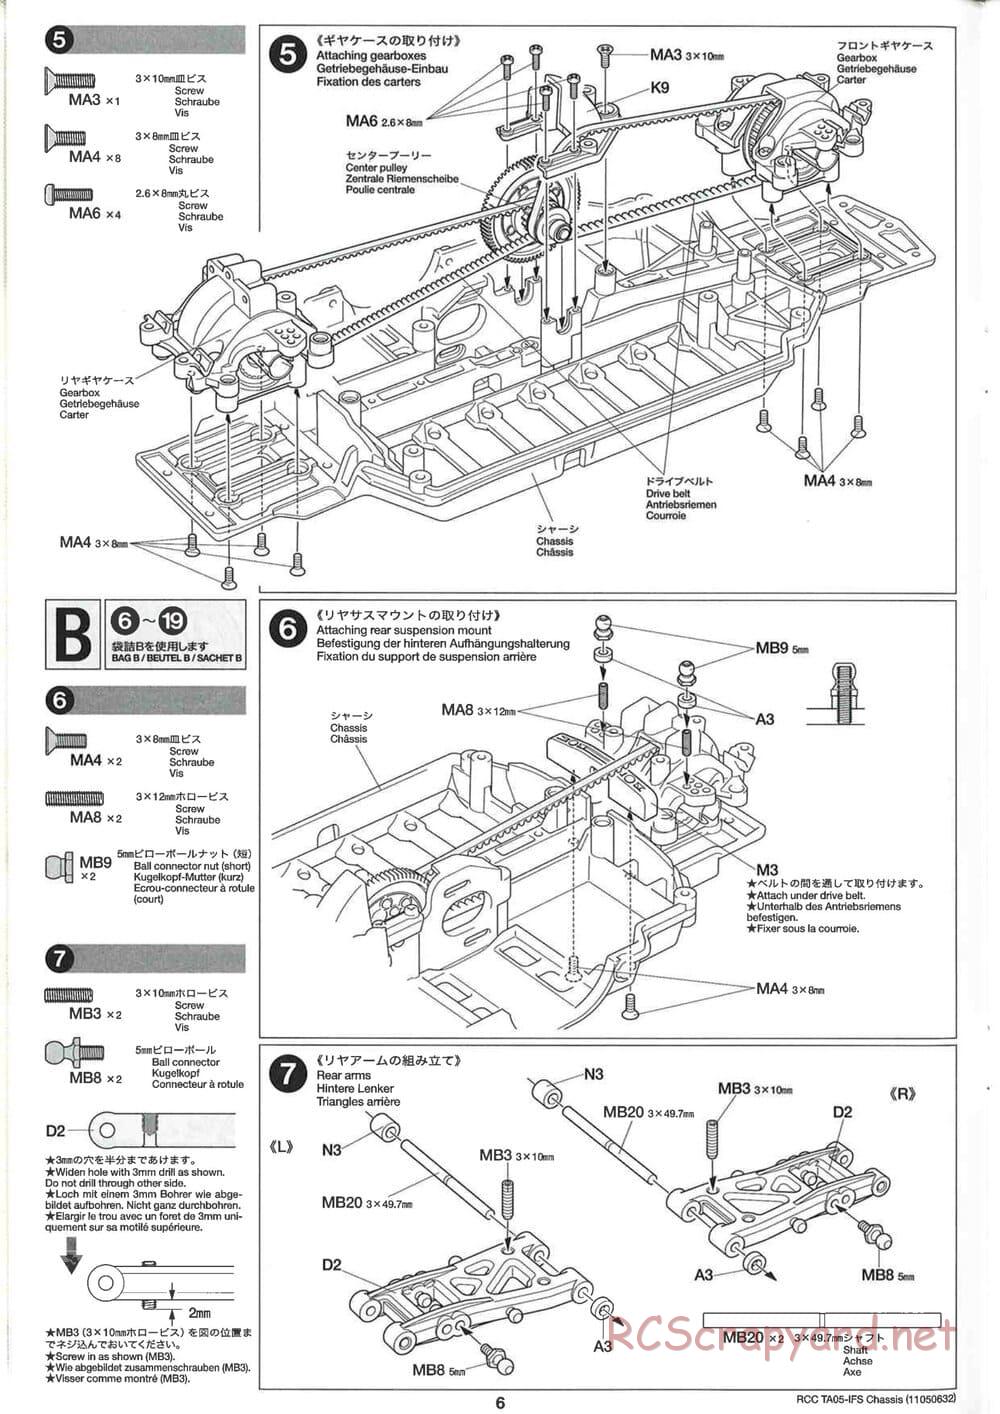 Tamiya - TA05-IFS Chassis - Manual - Page 6